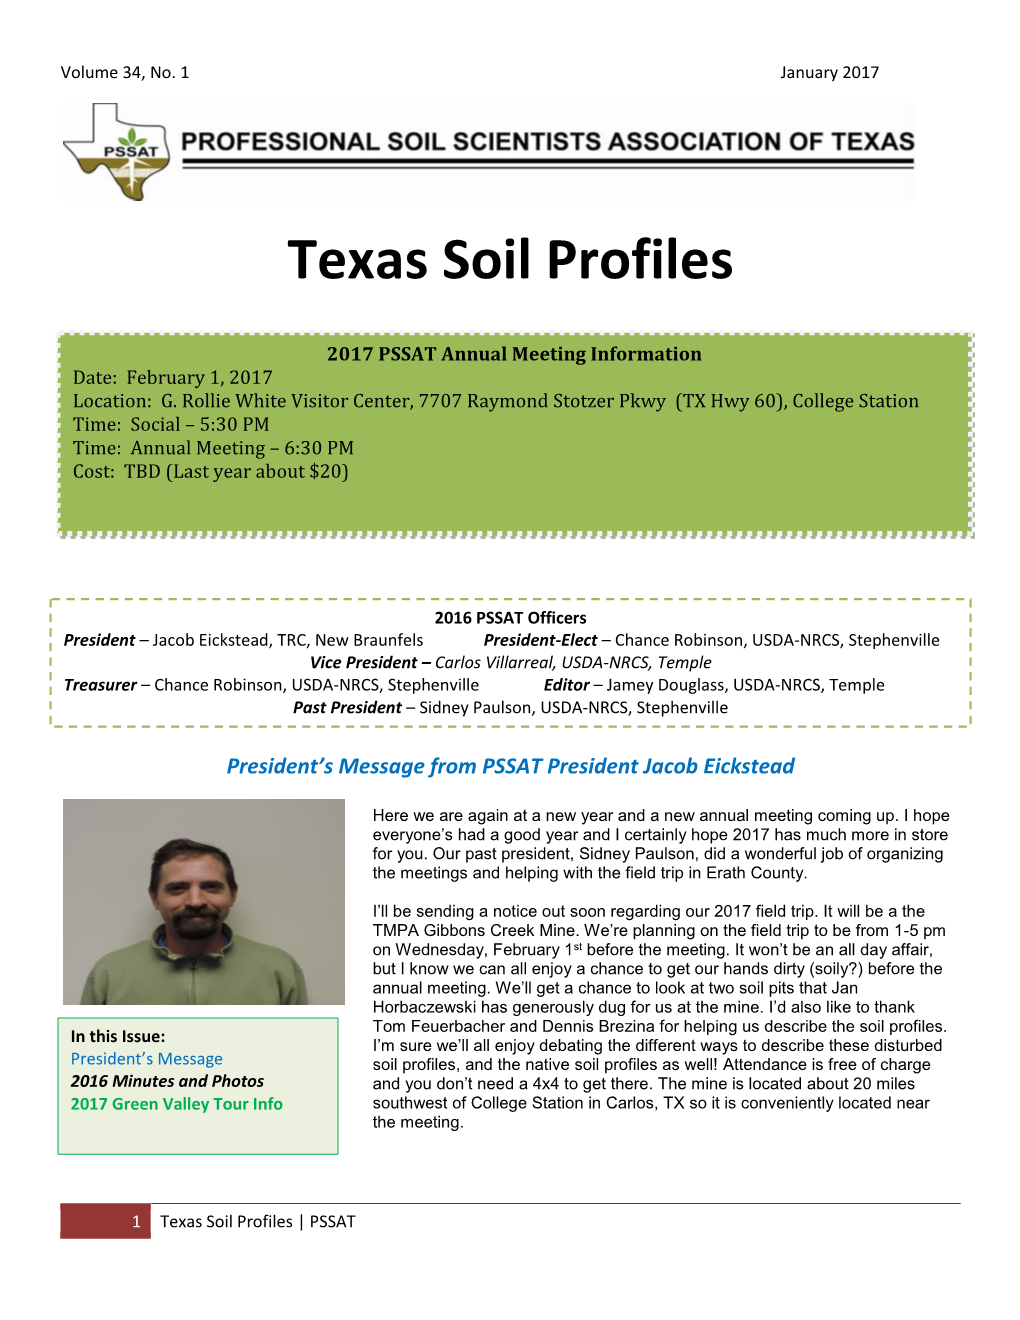 Texas Soil Profiles Vol. 34 No. 1